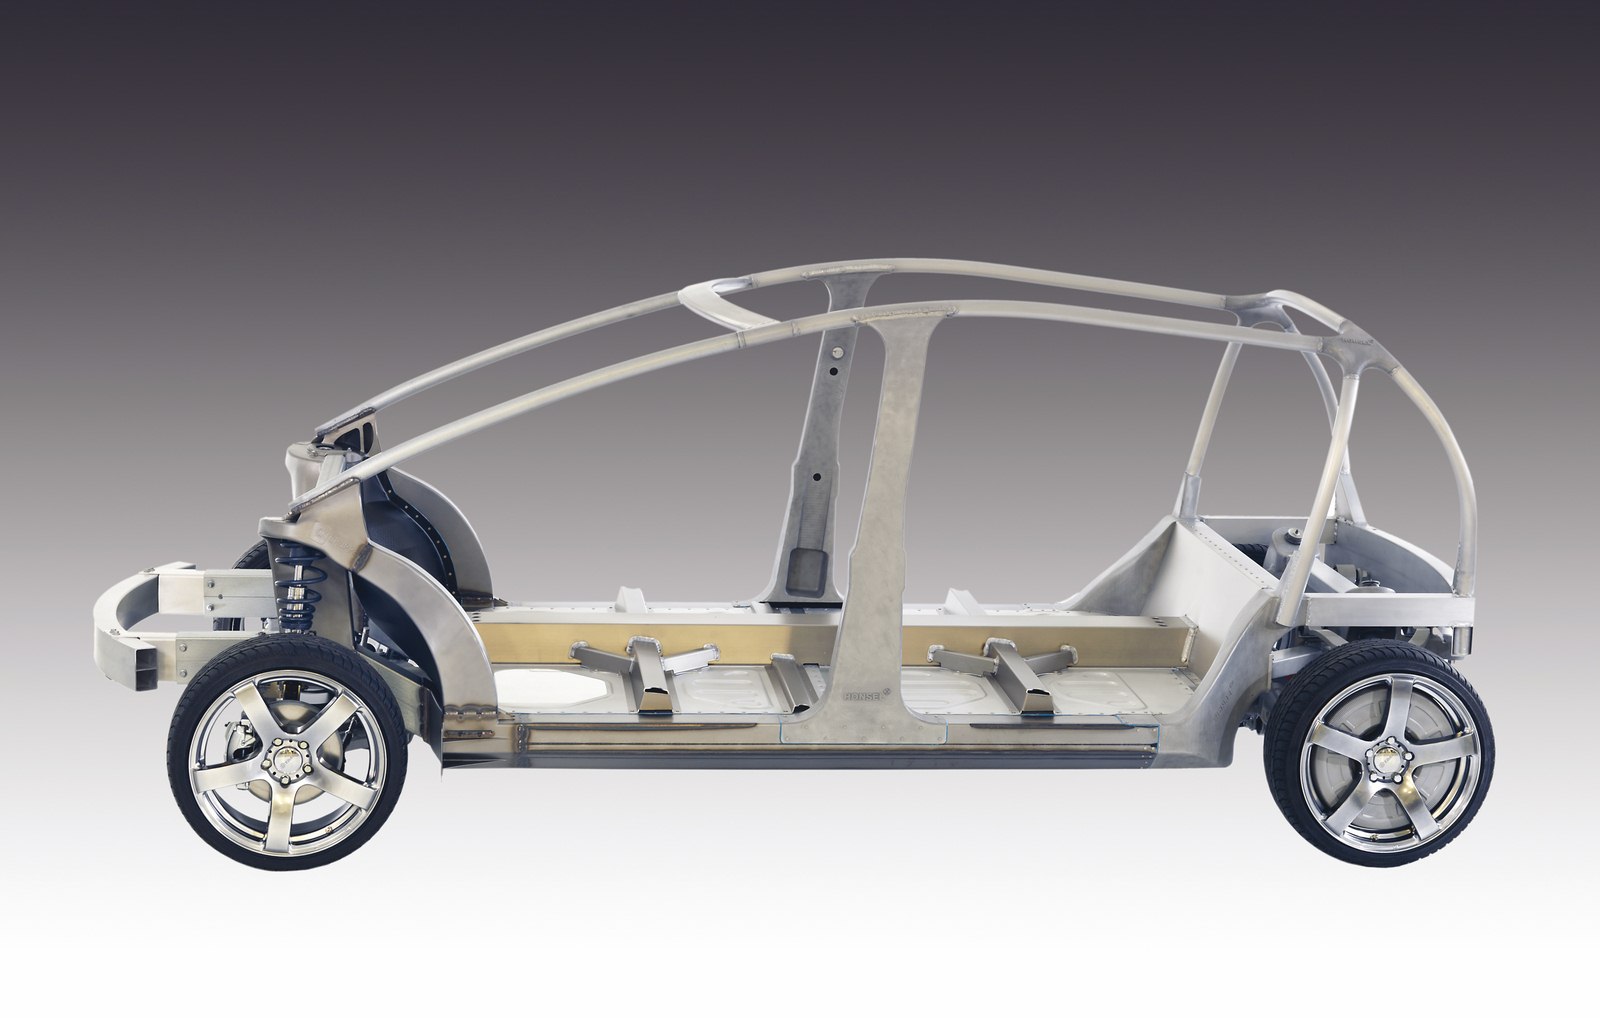 2010. EDAG Light Car - Open Source